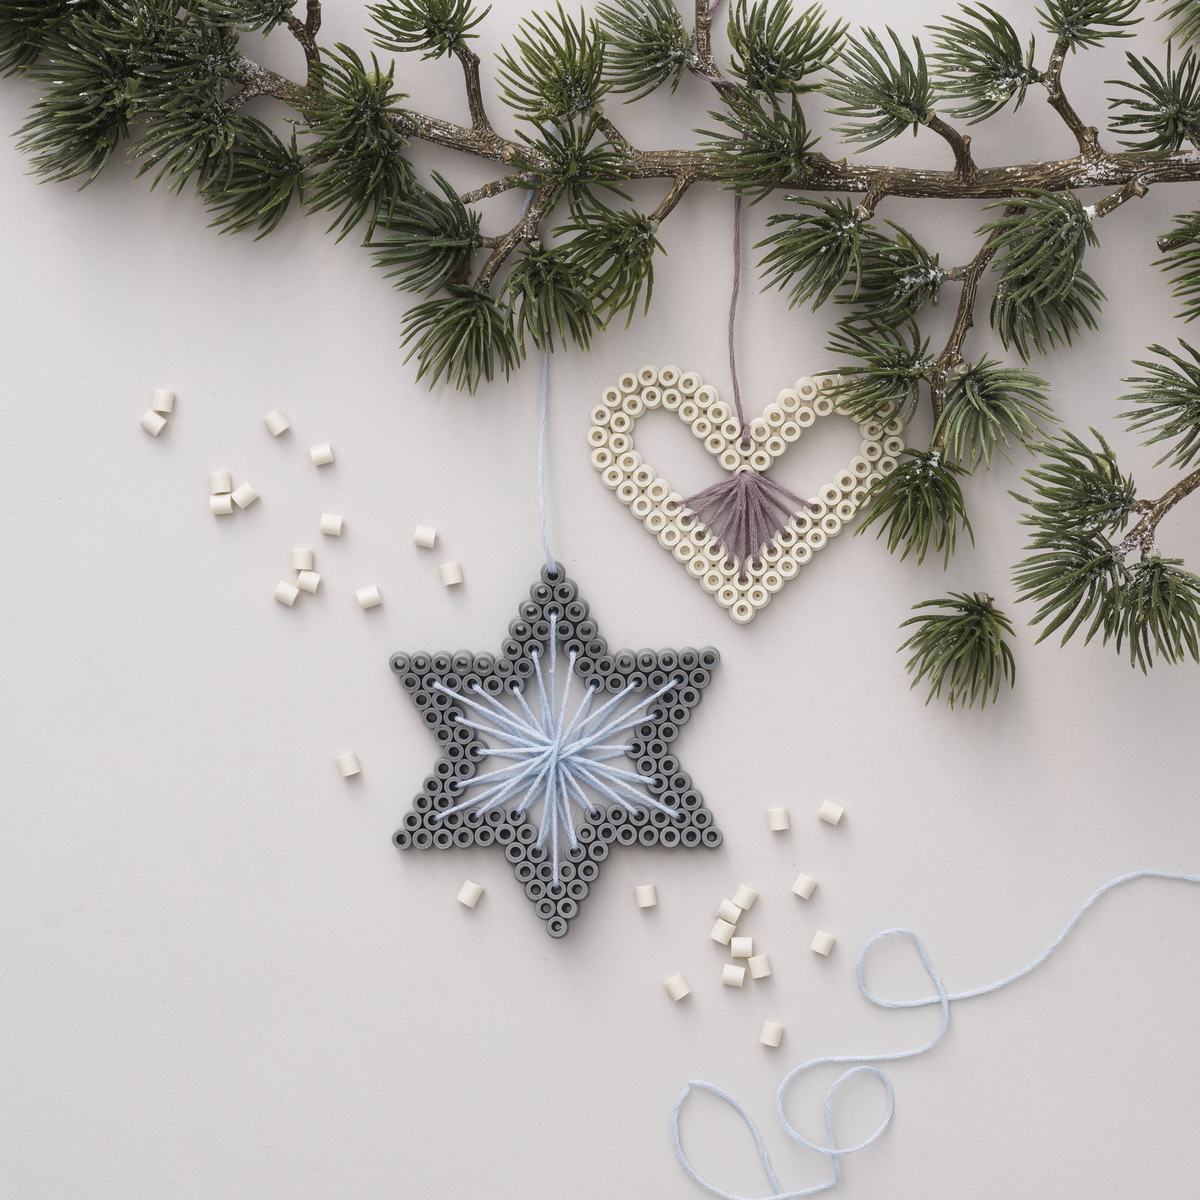 Make beaded Christmas tree ornaments